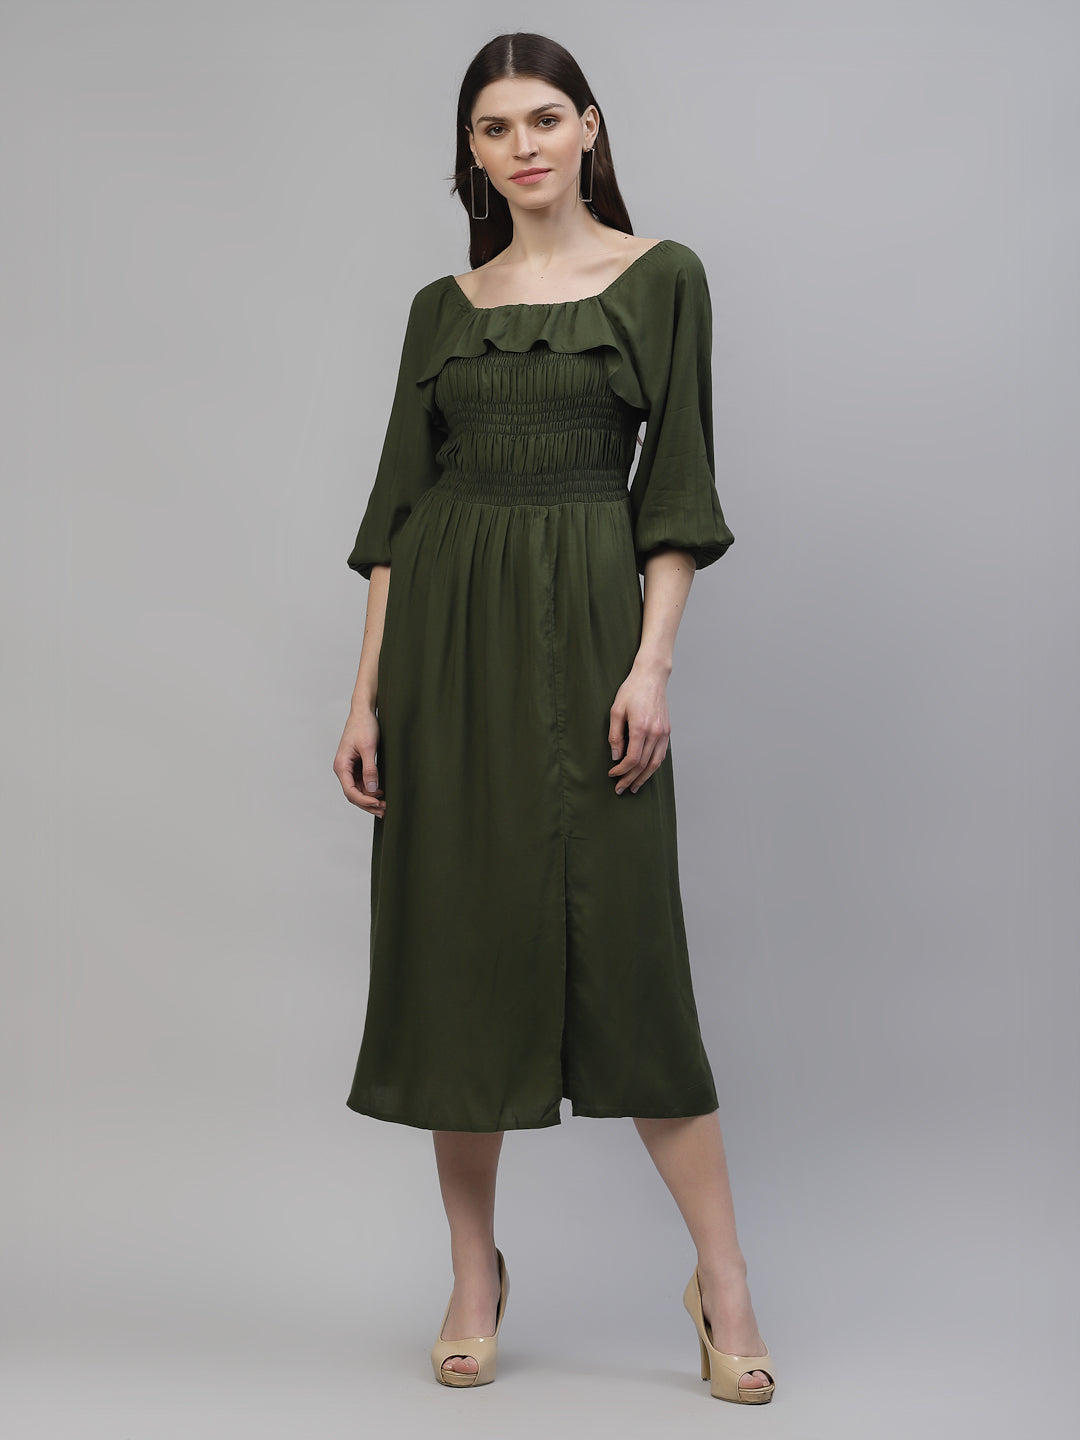 Athena Women Olive Green Solid Empire Dress - Athena Lifestyle